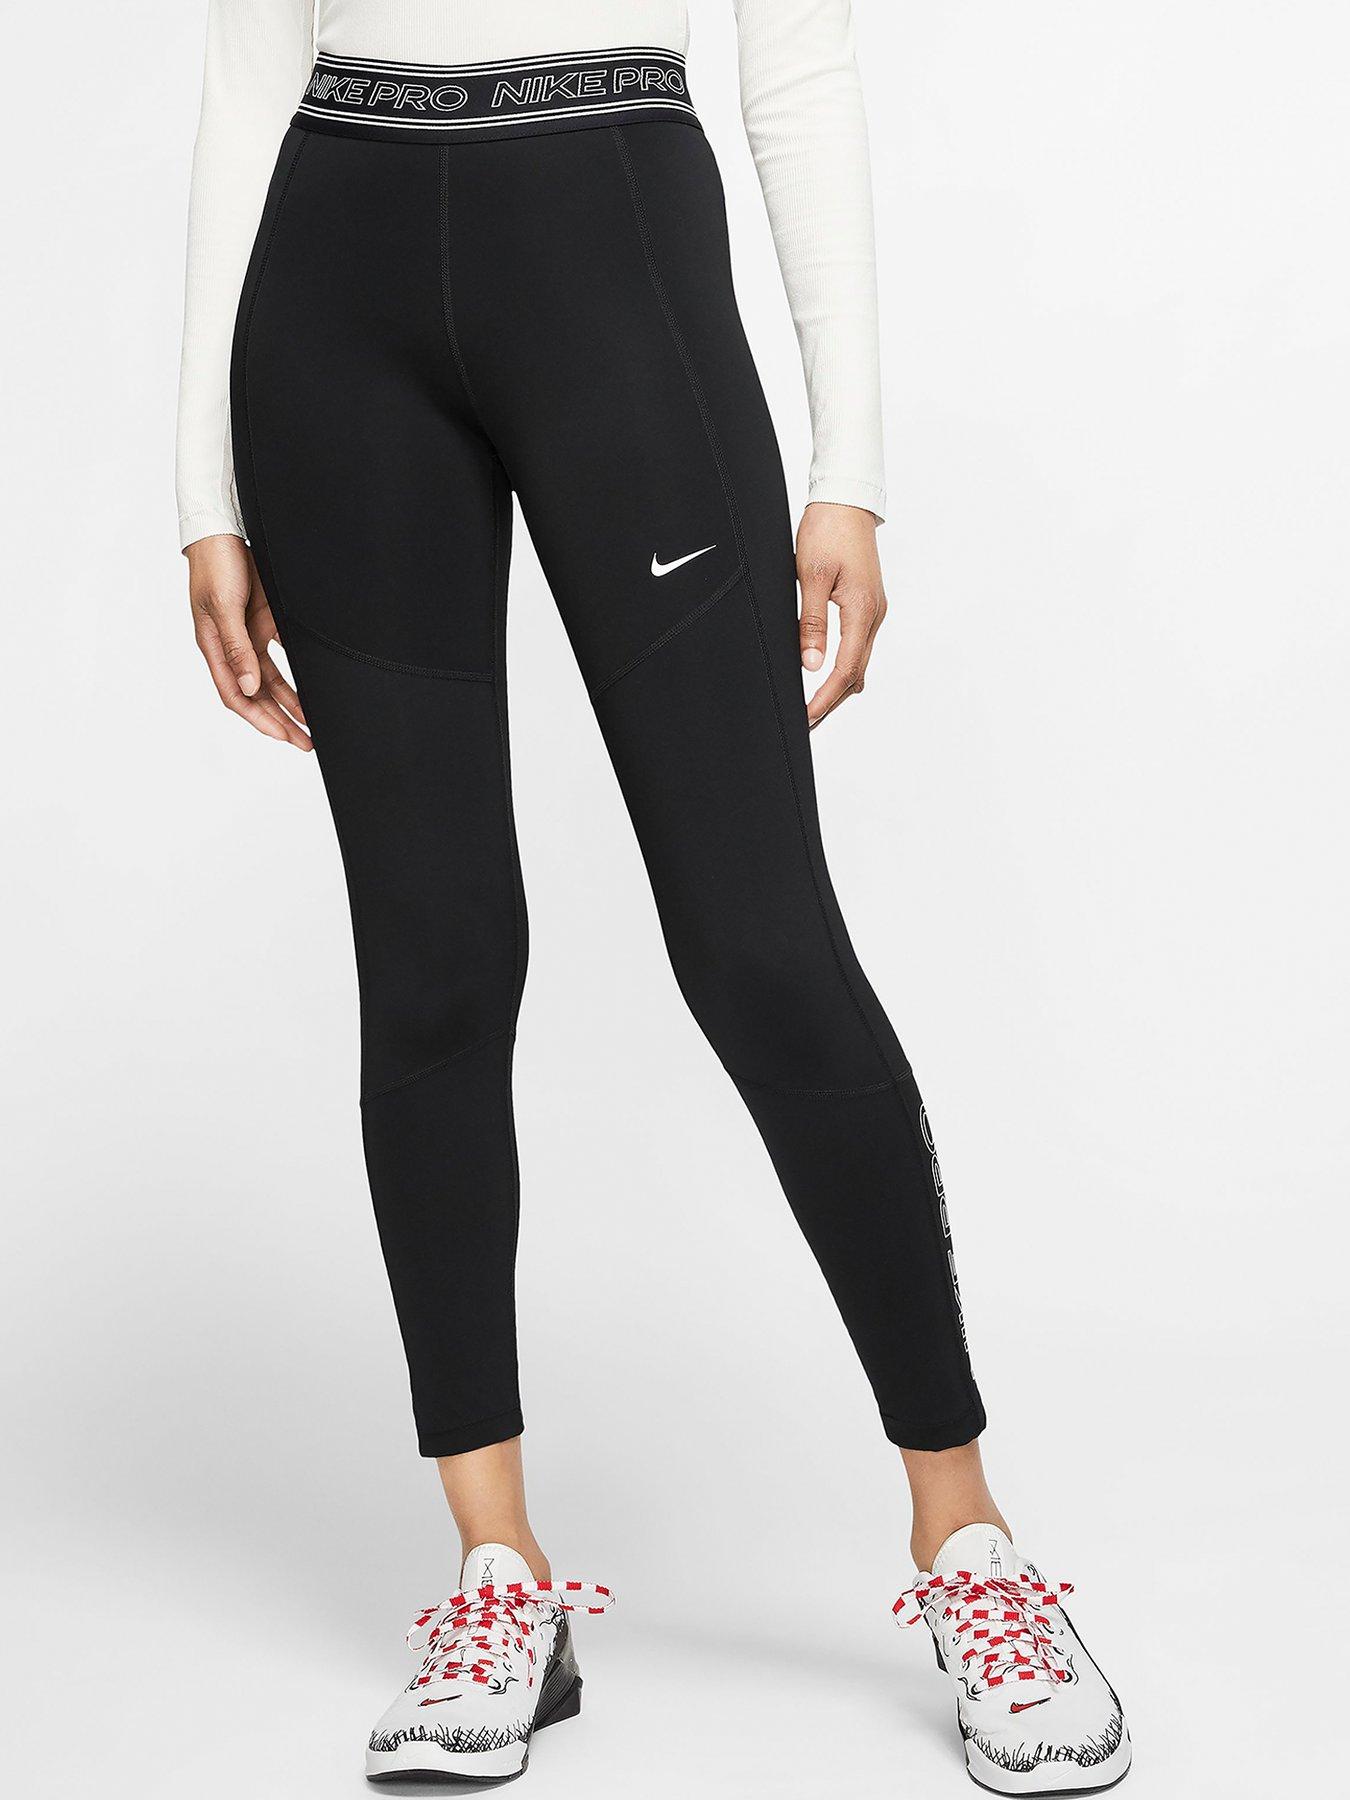 Tights & leggings | Womens sports clothing | Sports & leisure | Nike ...